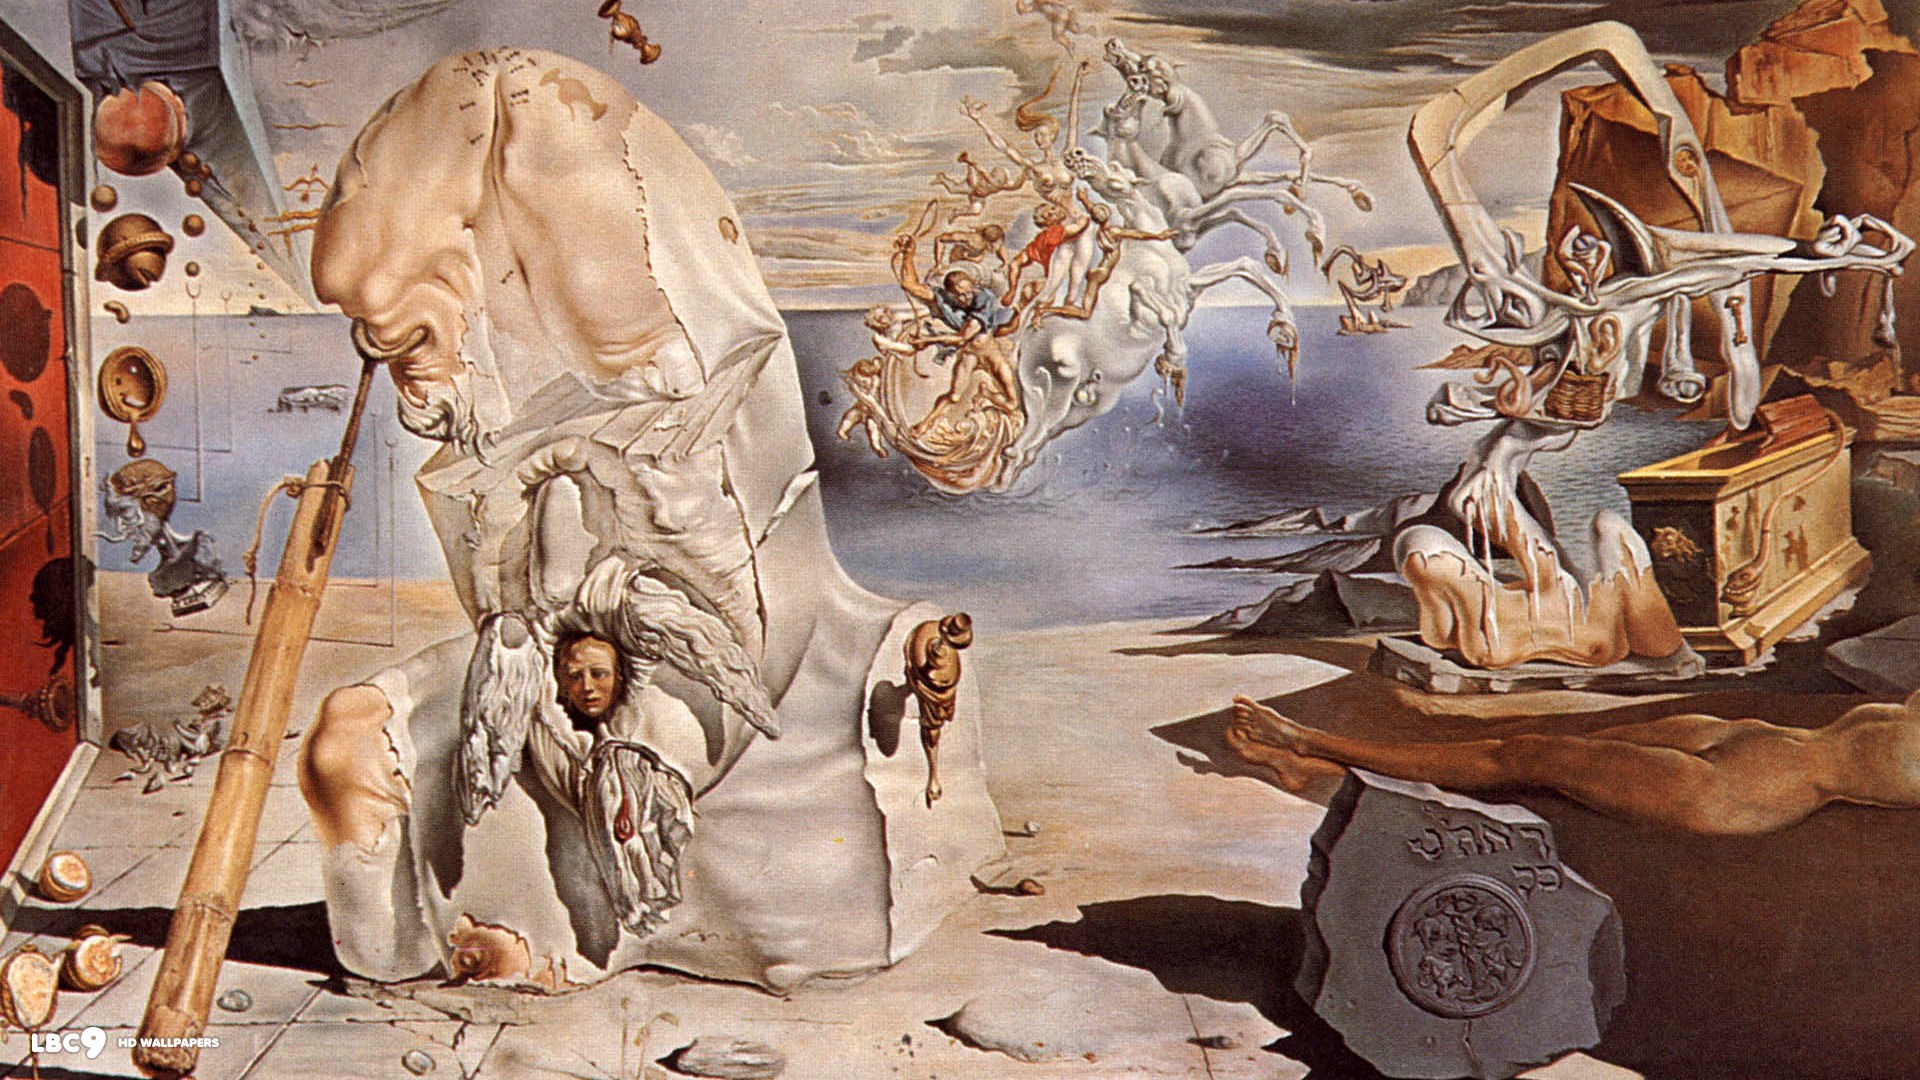 General 1920x1080 Salvador Dalí Salvador Dalí painting fantasy art classic art surreal